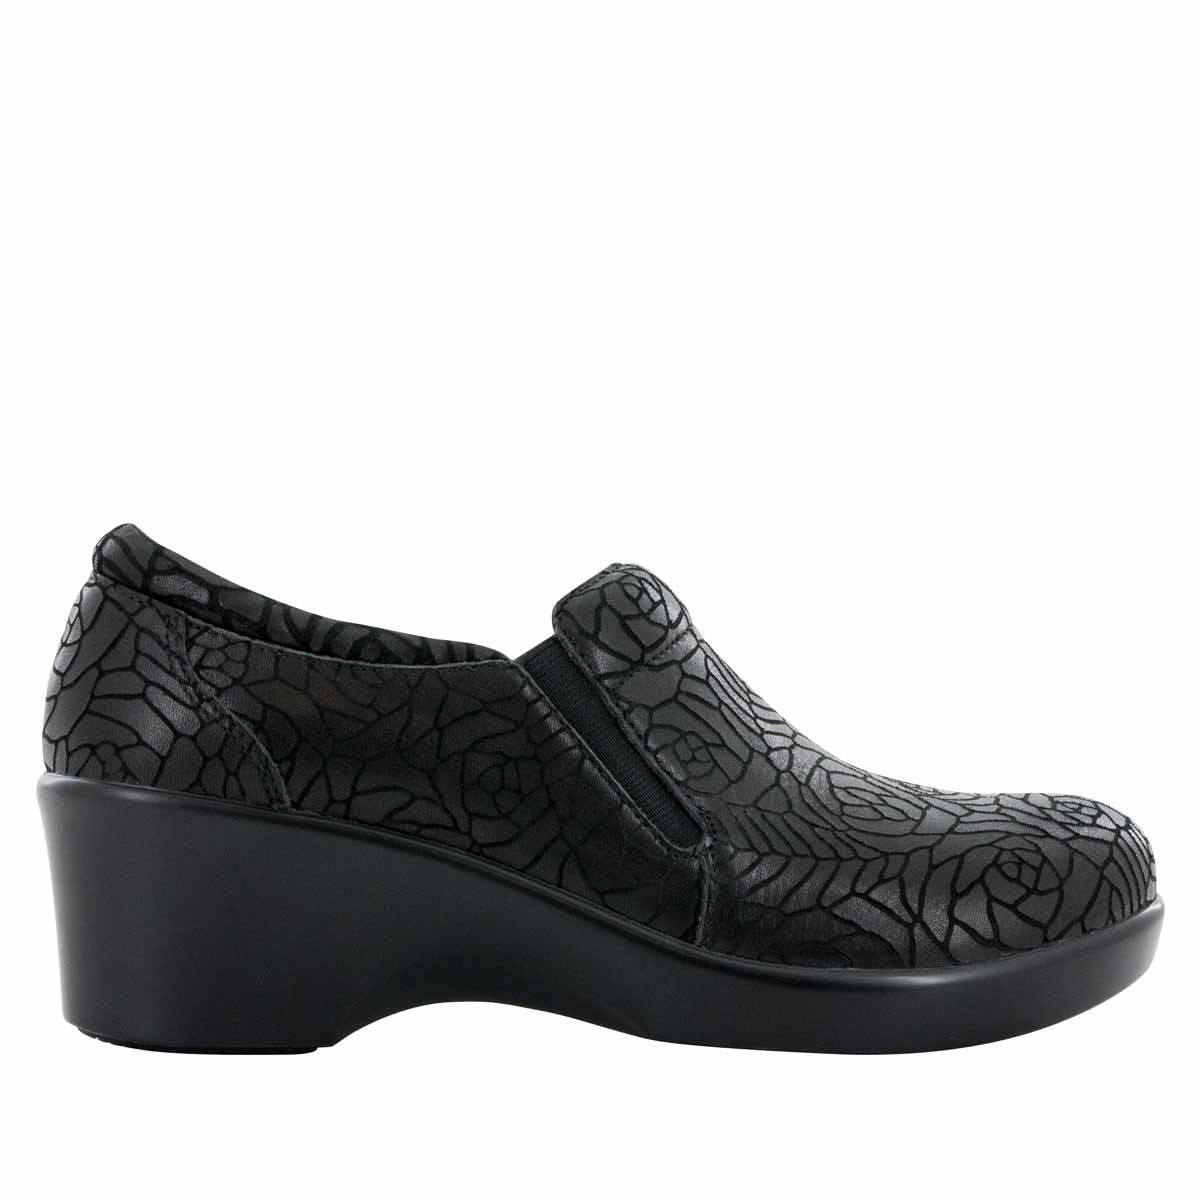 Women's Alegria Comfort Eryn Slip On Shoe Black Floral Notes ERY-586 